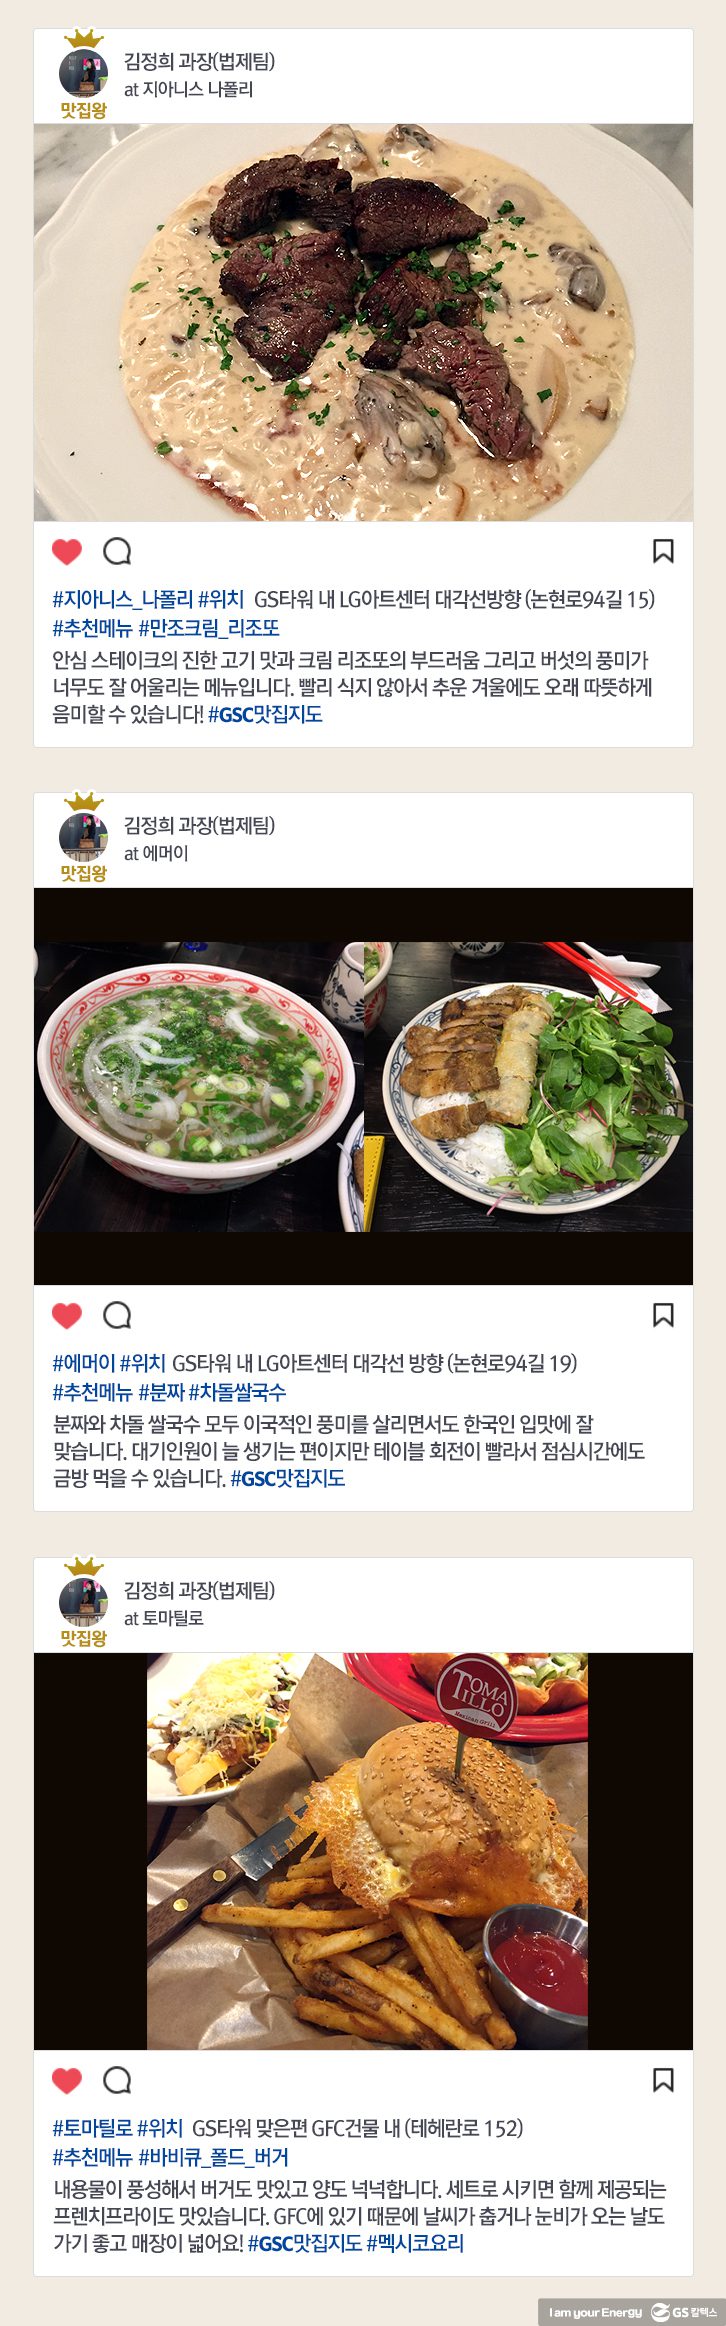 2018 jan food 07 1 1월 기업소식, 매거진